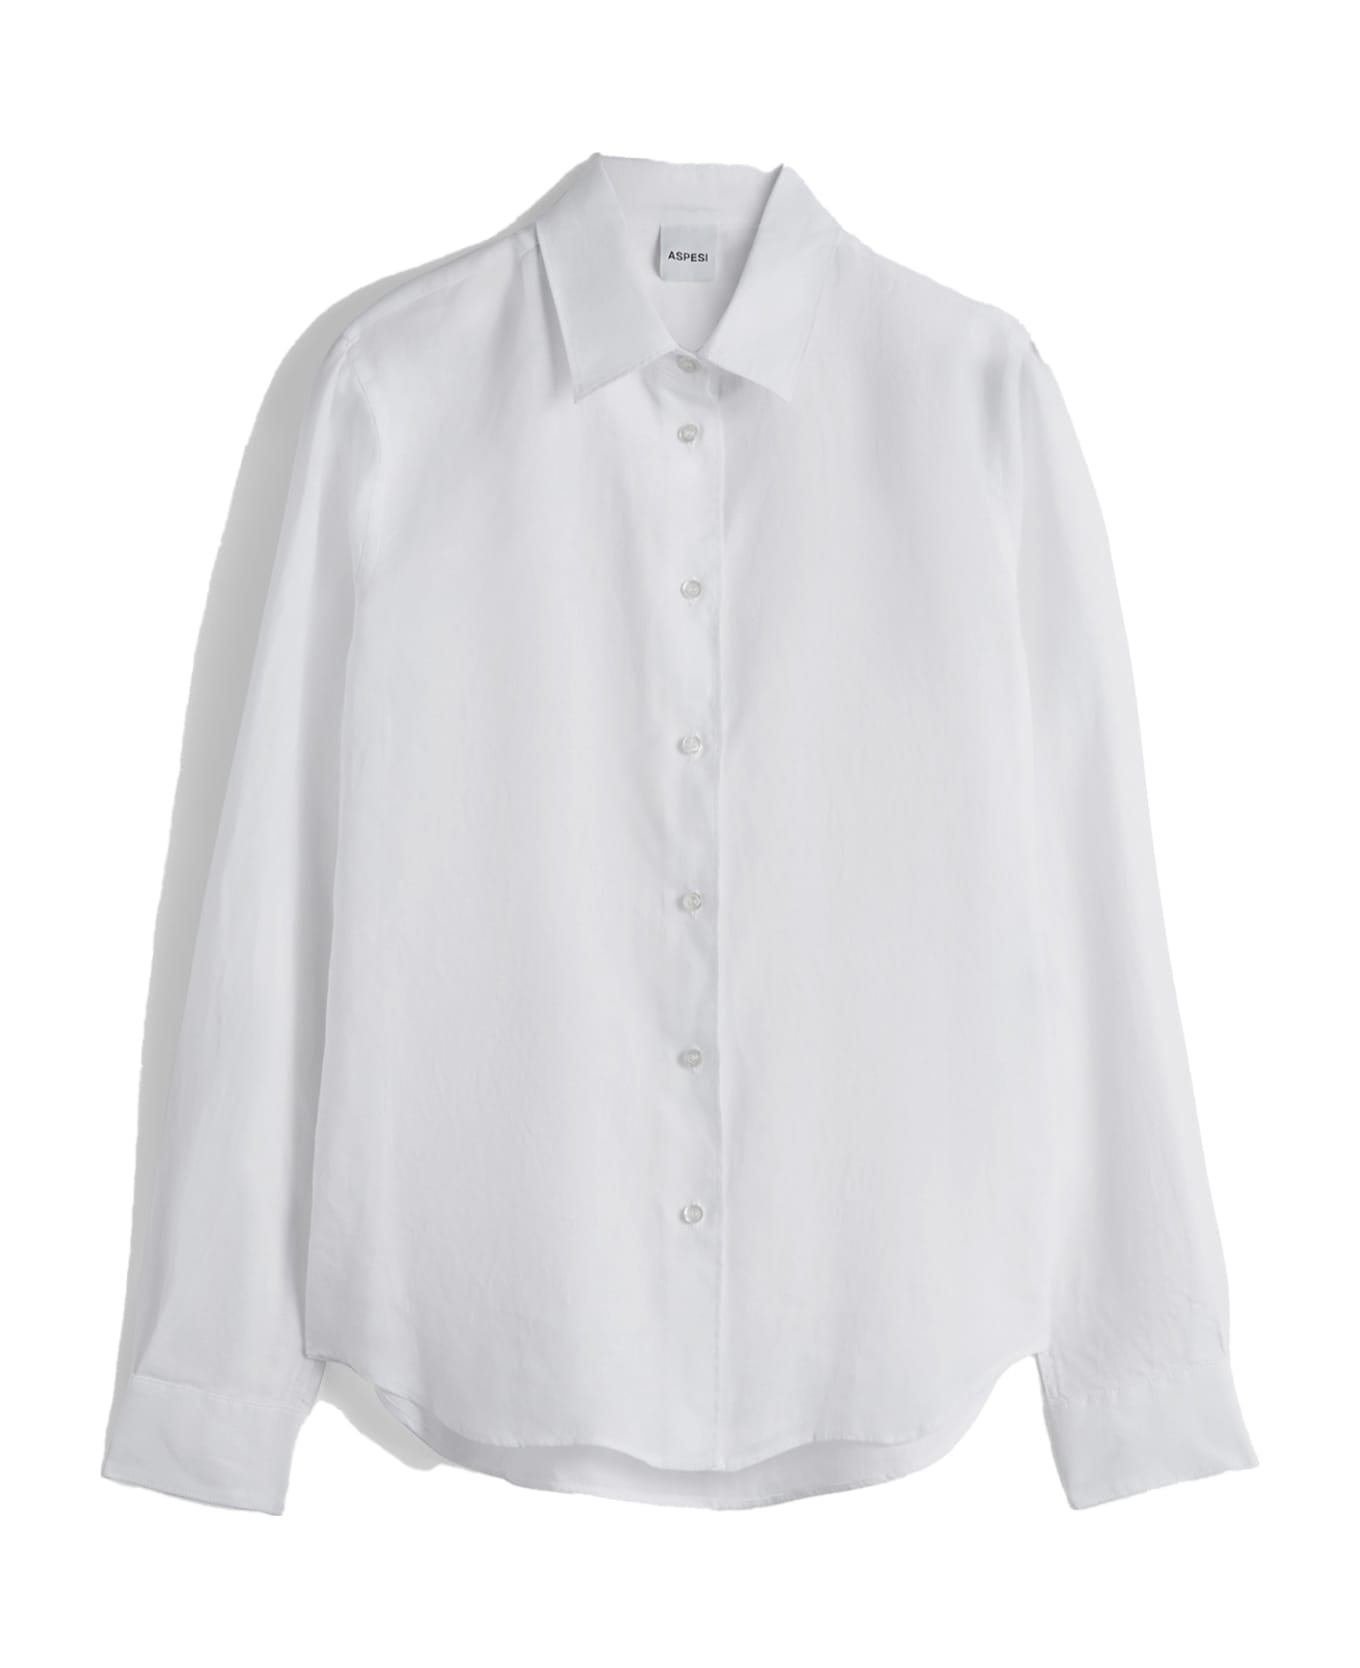 Aspesi White Long-sleeved Shirt - BIANCO シャツ